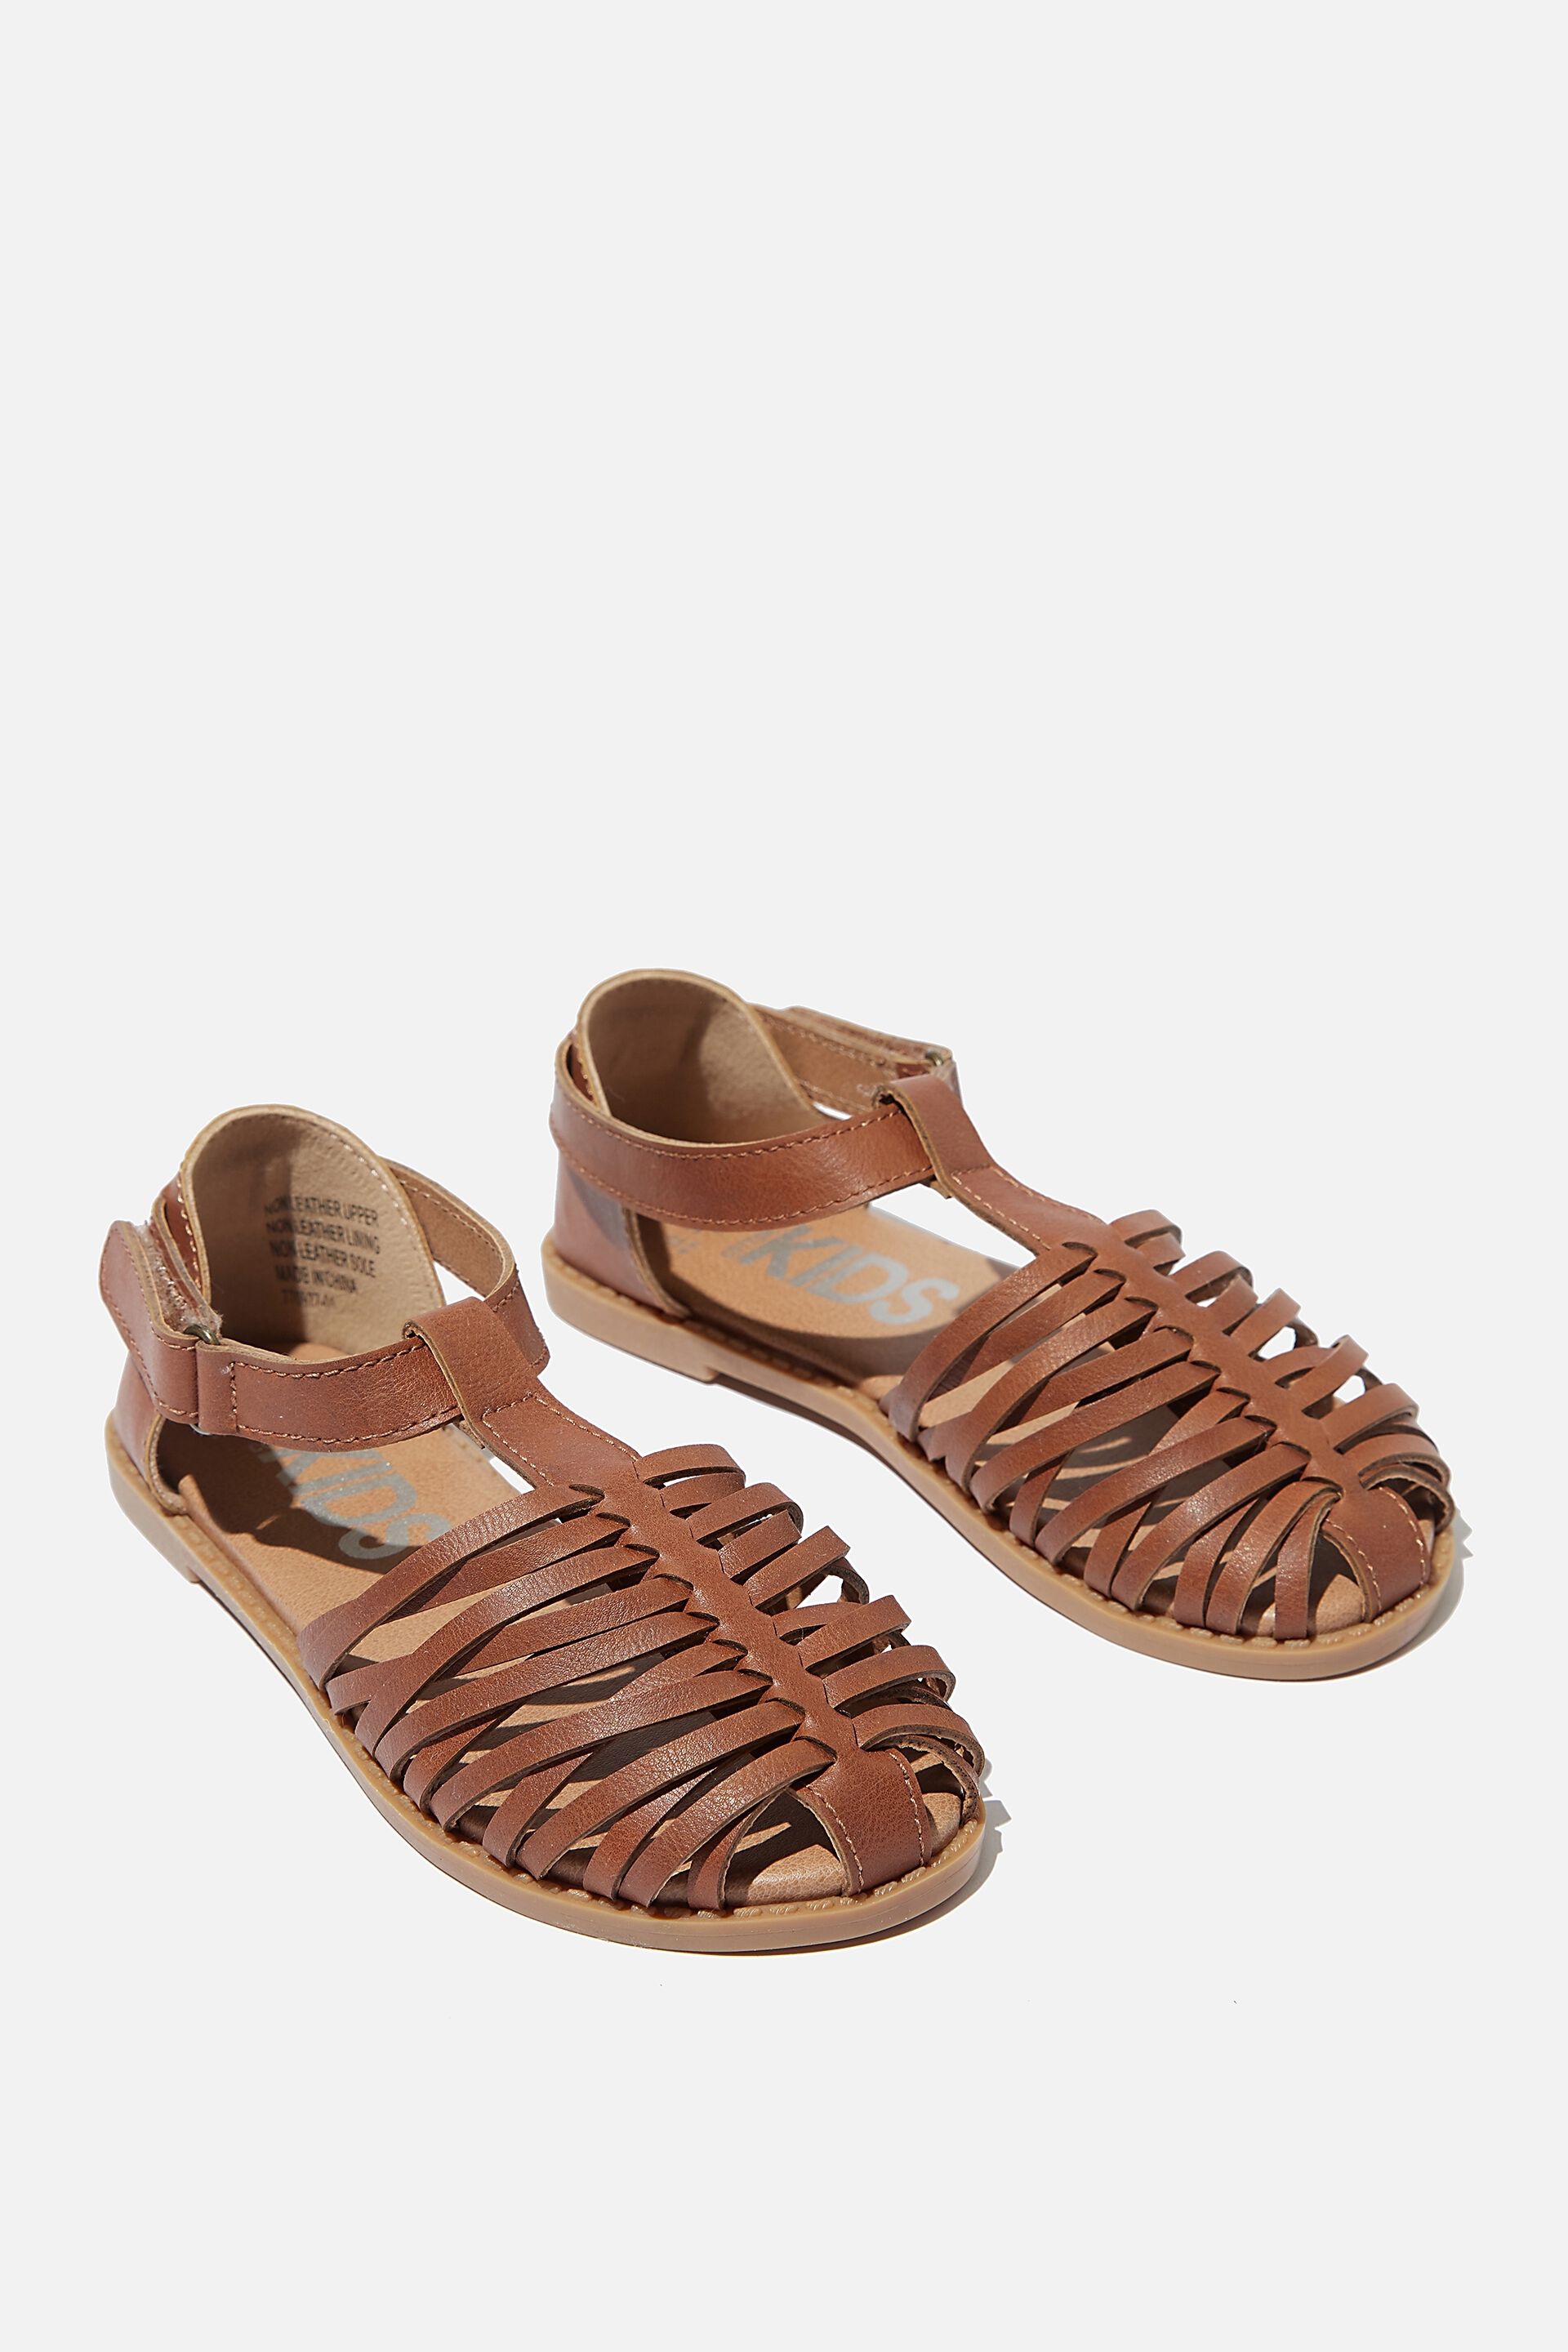 Girls Shoes, Sandals, Flip Flops \u0026 